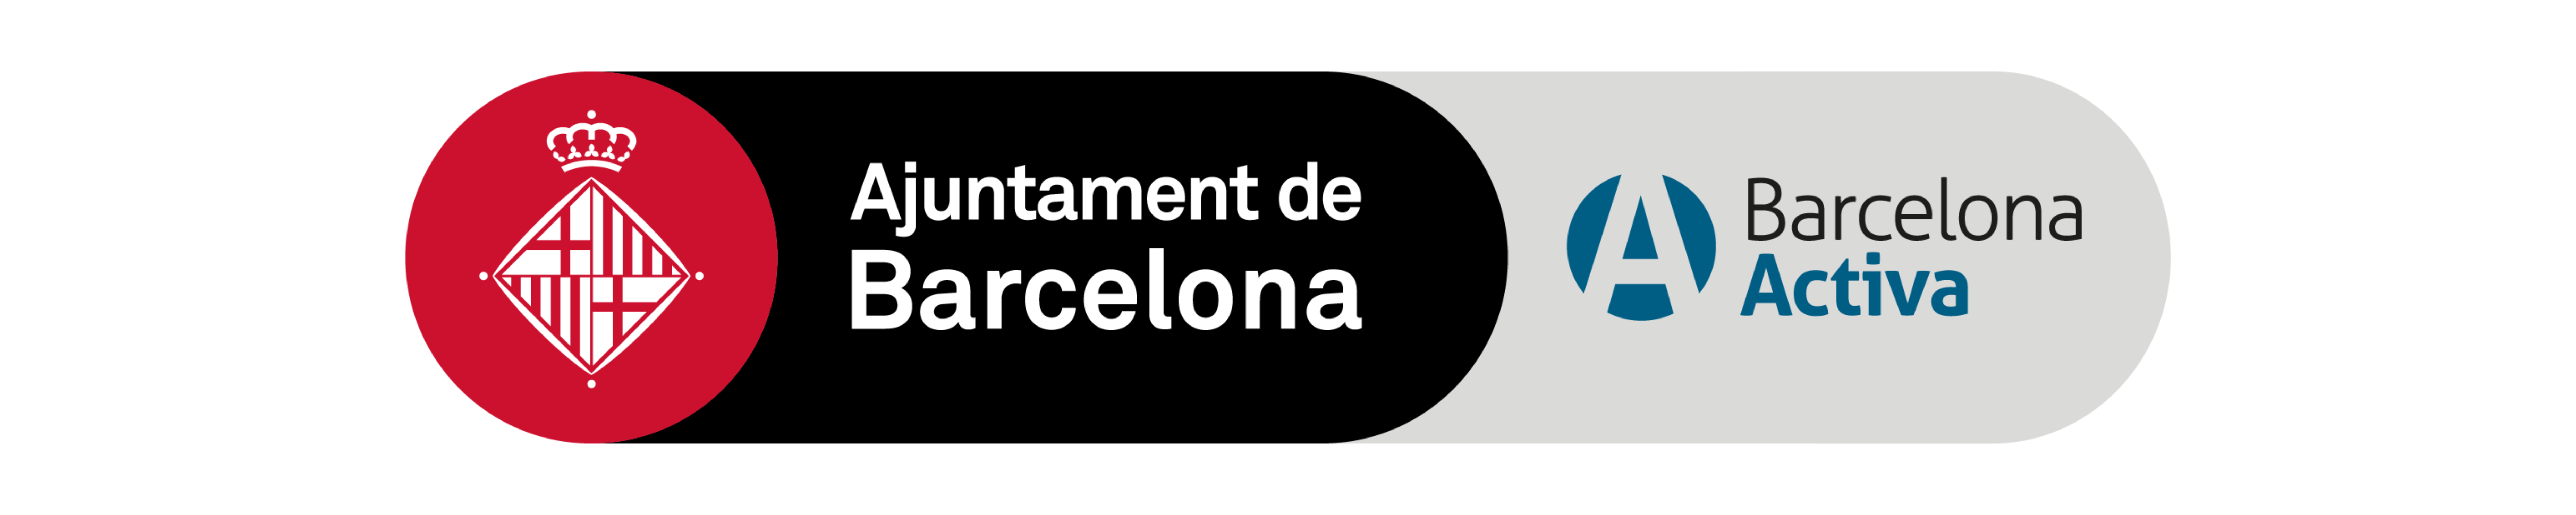 Barcelona Activa i Ajuntament logos ok